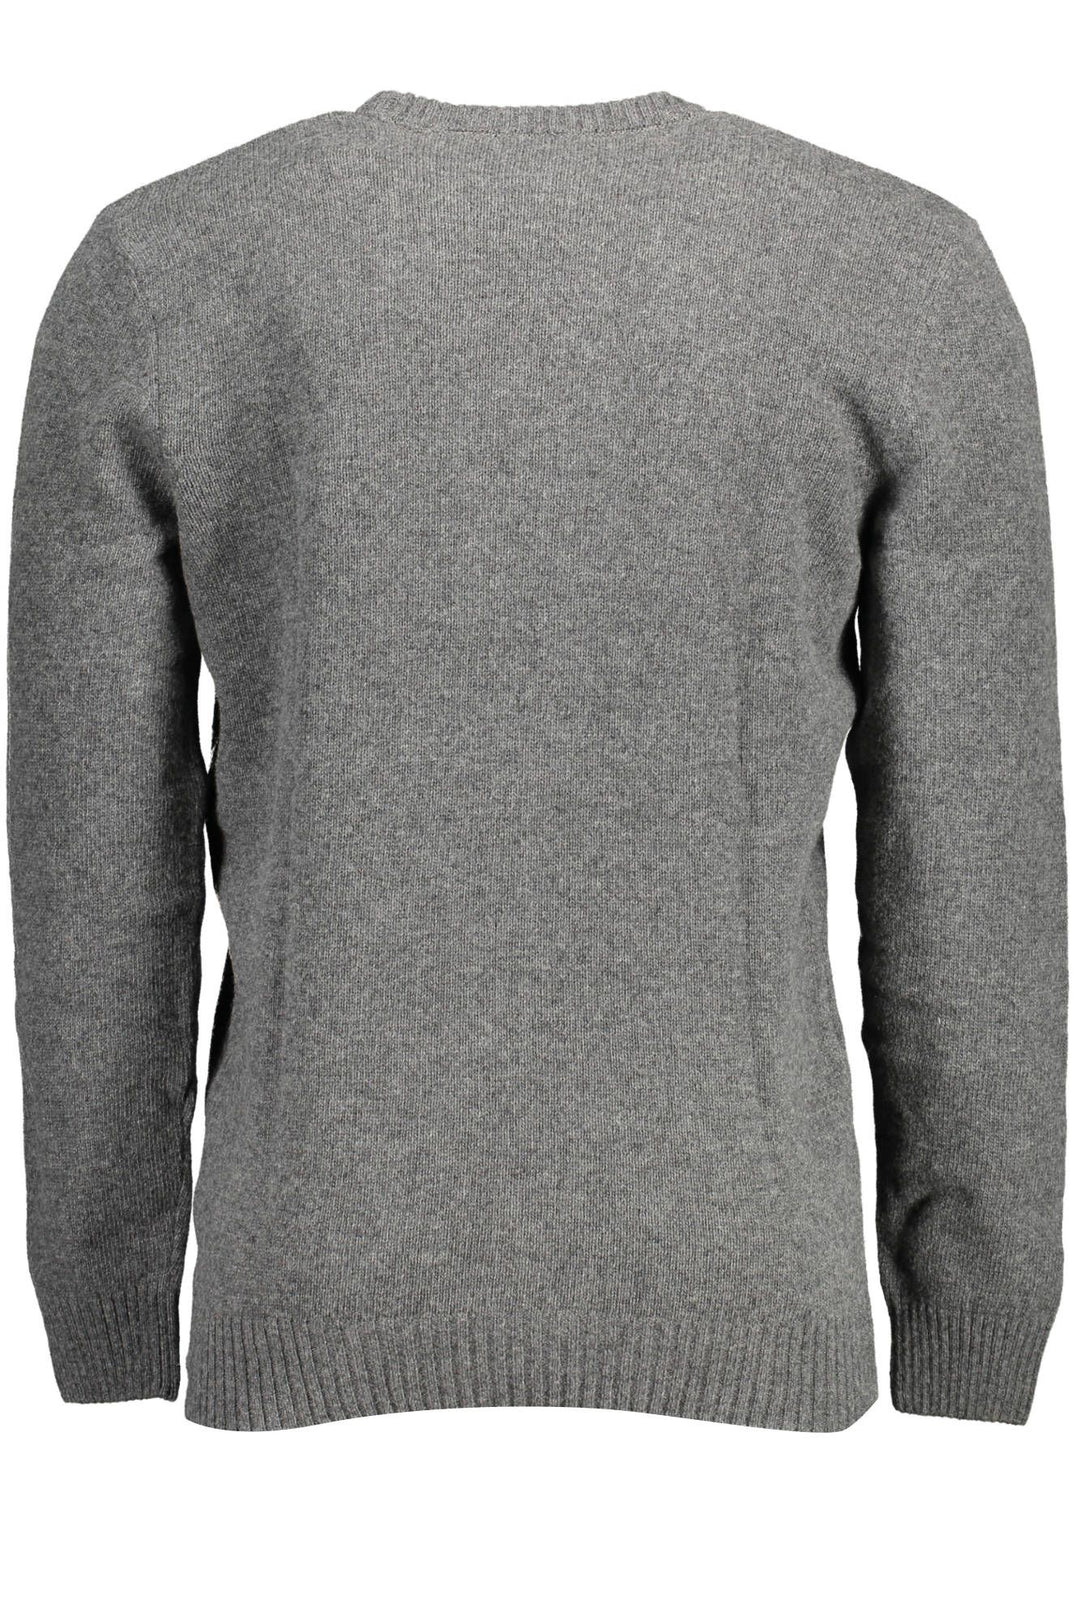 U.S. Polo Assn. Gray Wool Sweater